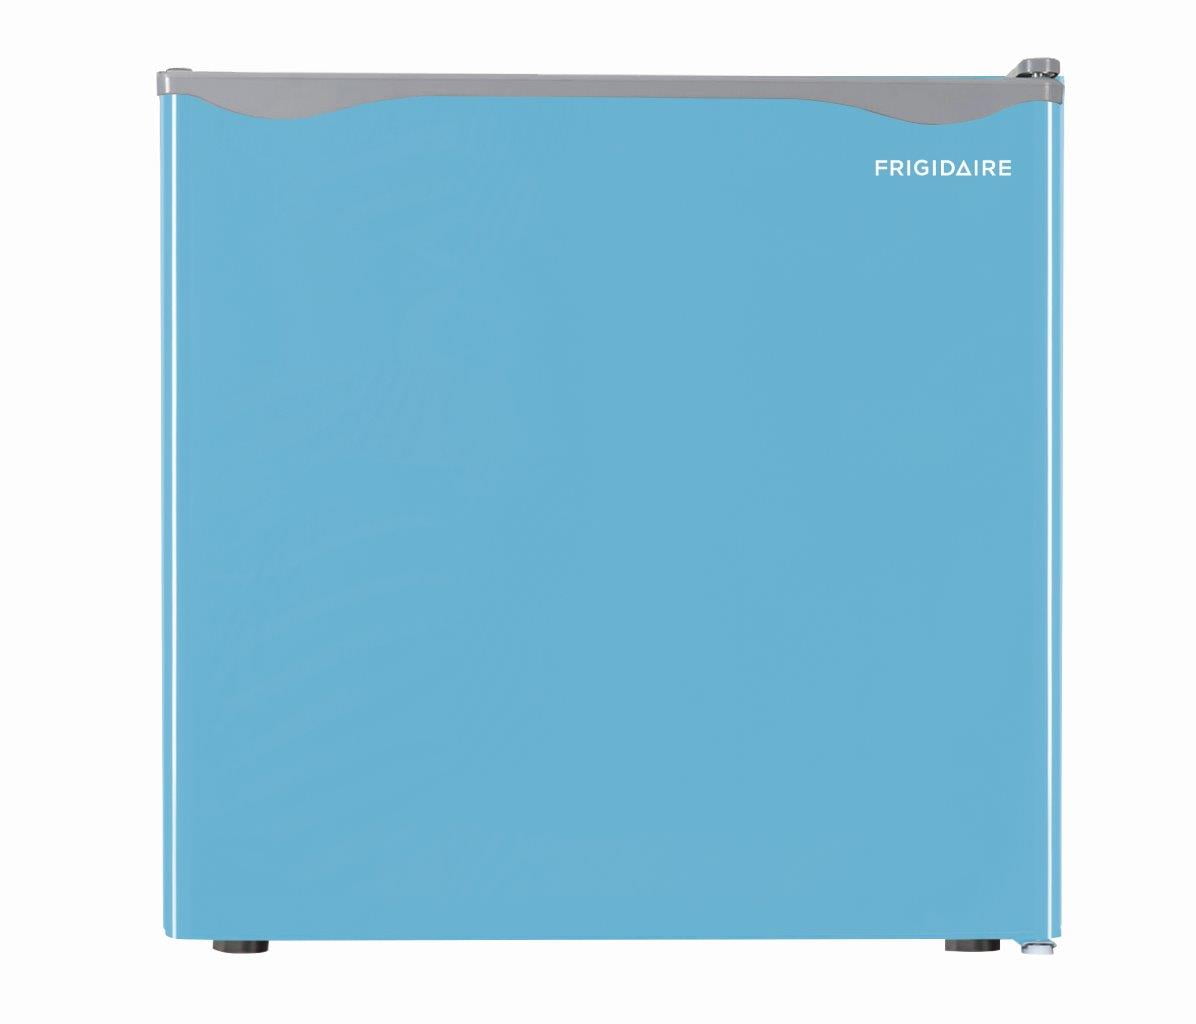 Frigidaire 1.6 cu. ft. Mini Fridge in Blue with Freezer EFR115-BLUE-COM -  The Home Depot